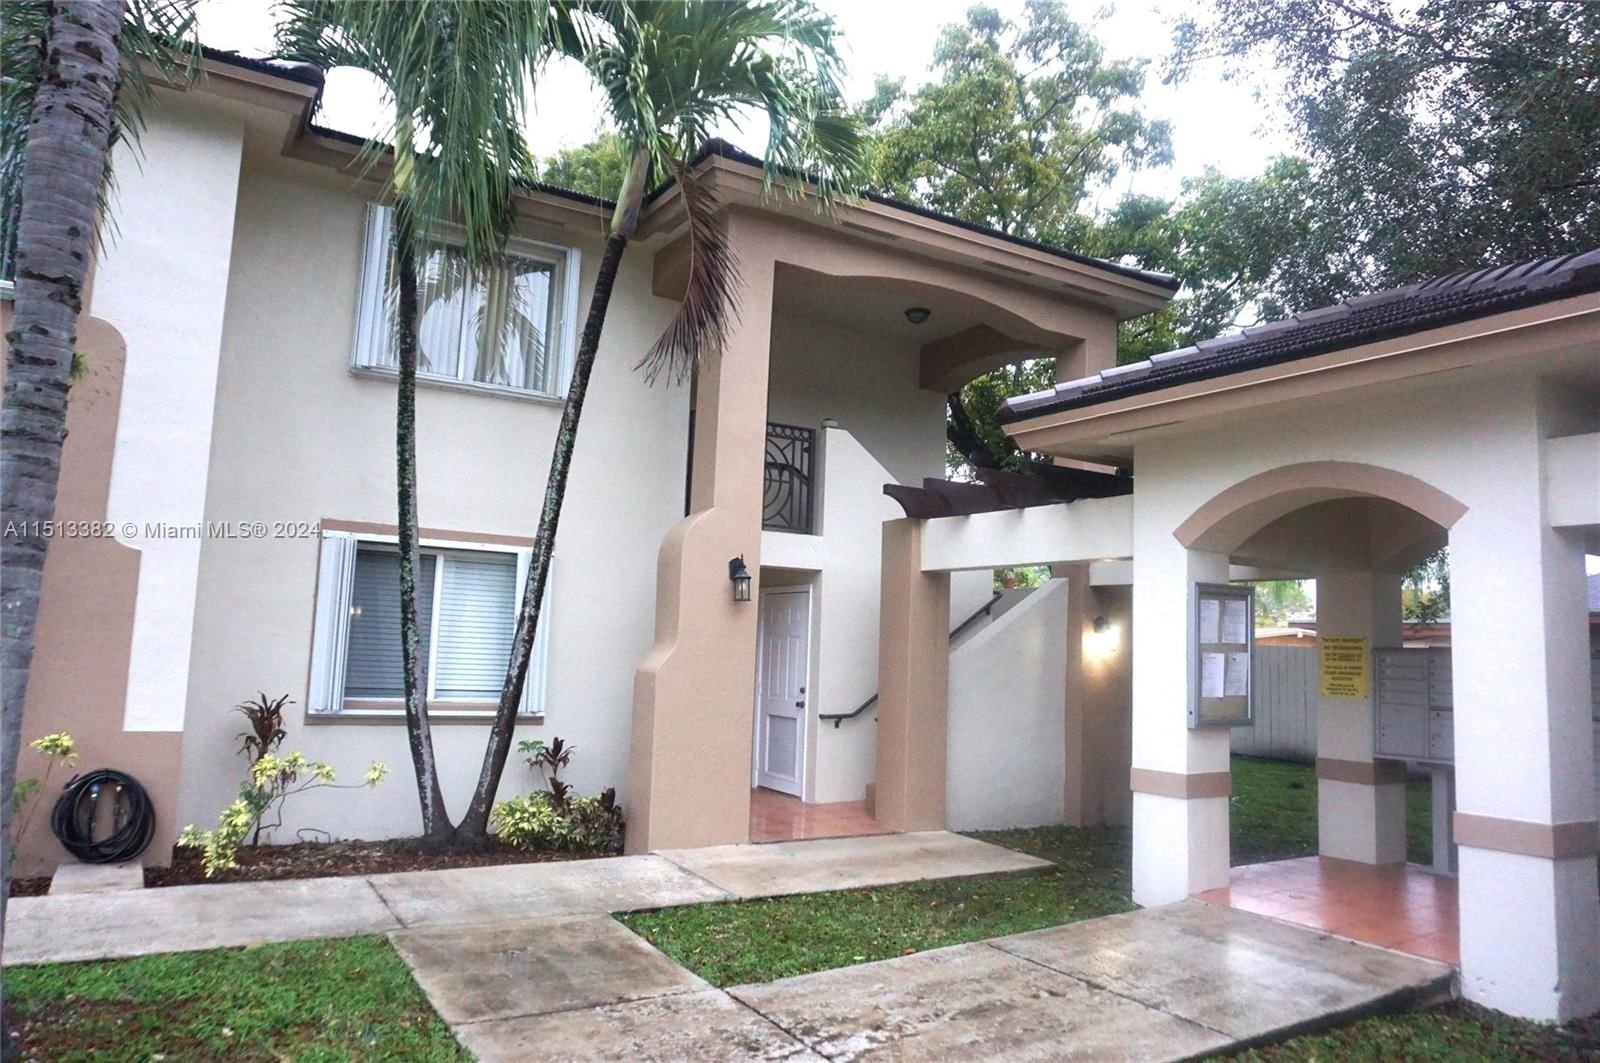 Real estate property located at 6656 116th Ct #508, Miami-Dade County, THE VILLAS AT SNAPPER VIL, Miami, FL